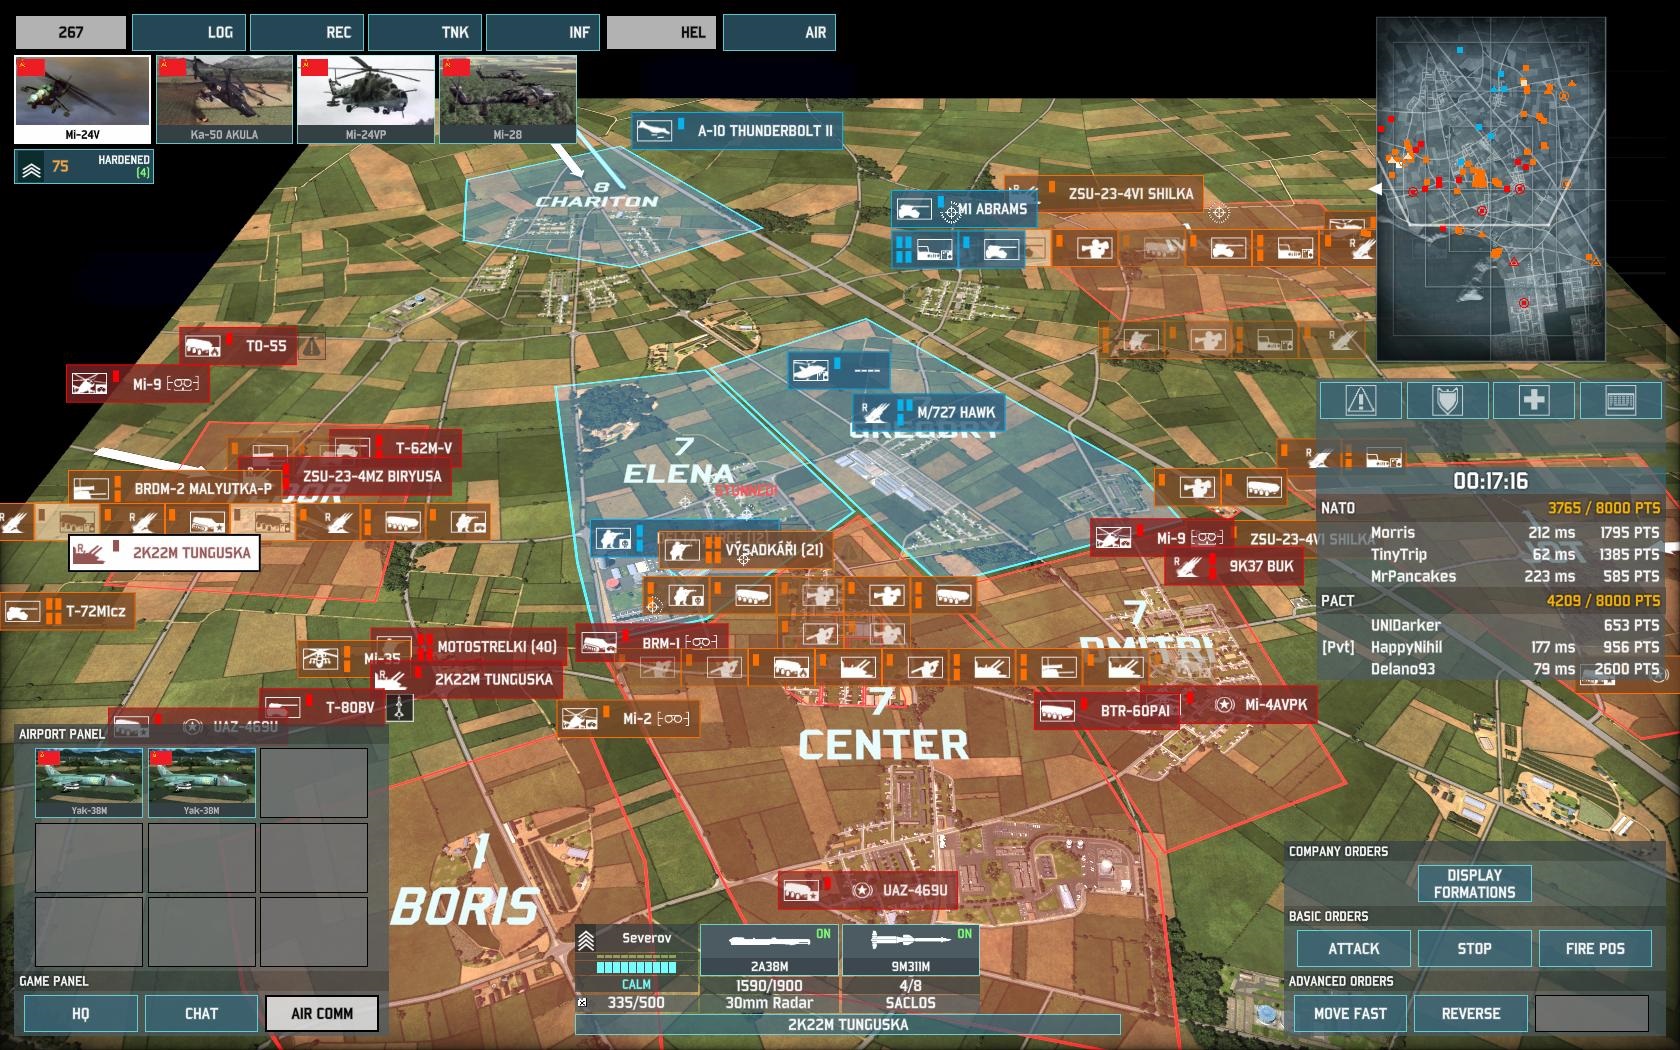 Wargame: AirLand Battle Nepriate je v klieach, sta zablokova posledn zemie s prsunom posl. 